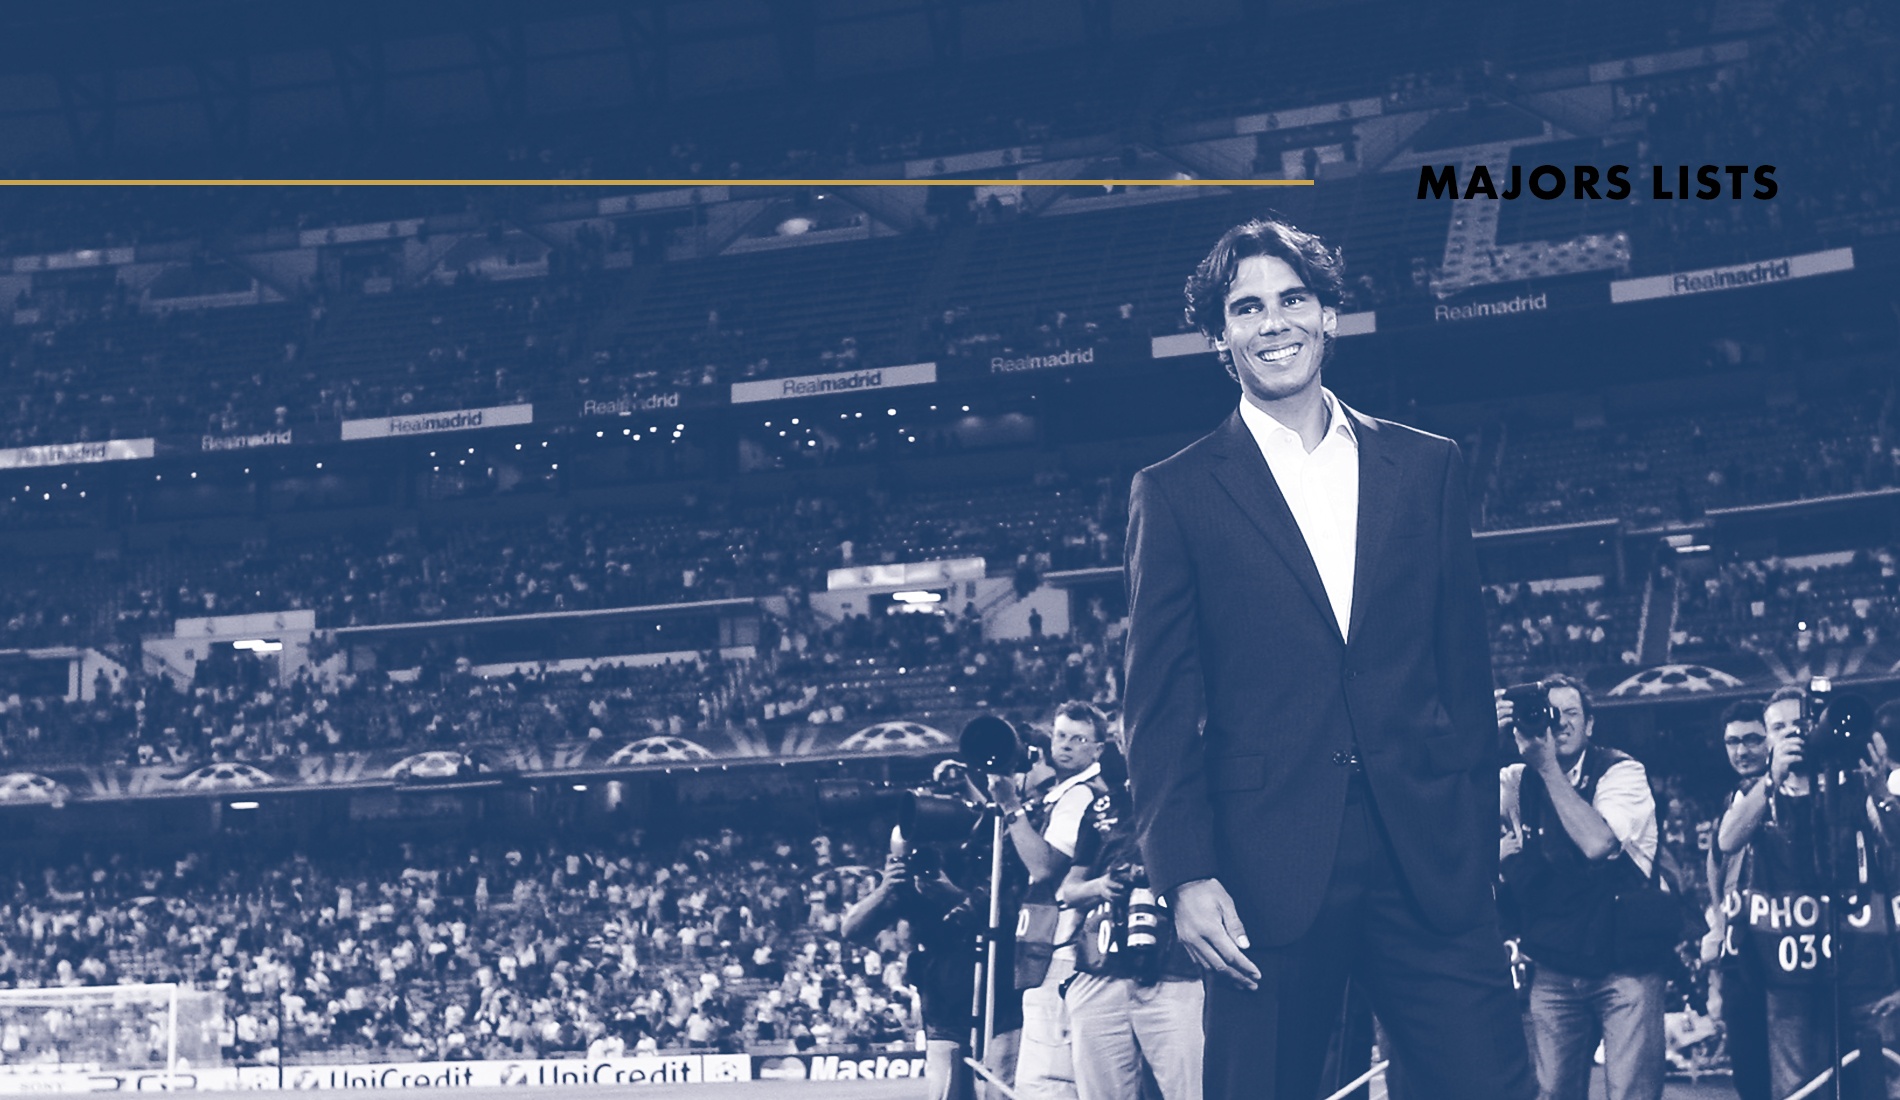 Rafael Nadal - Real Madrid : Tennis Majors Lists